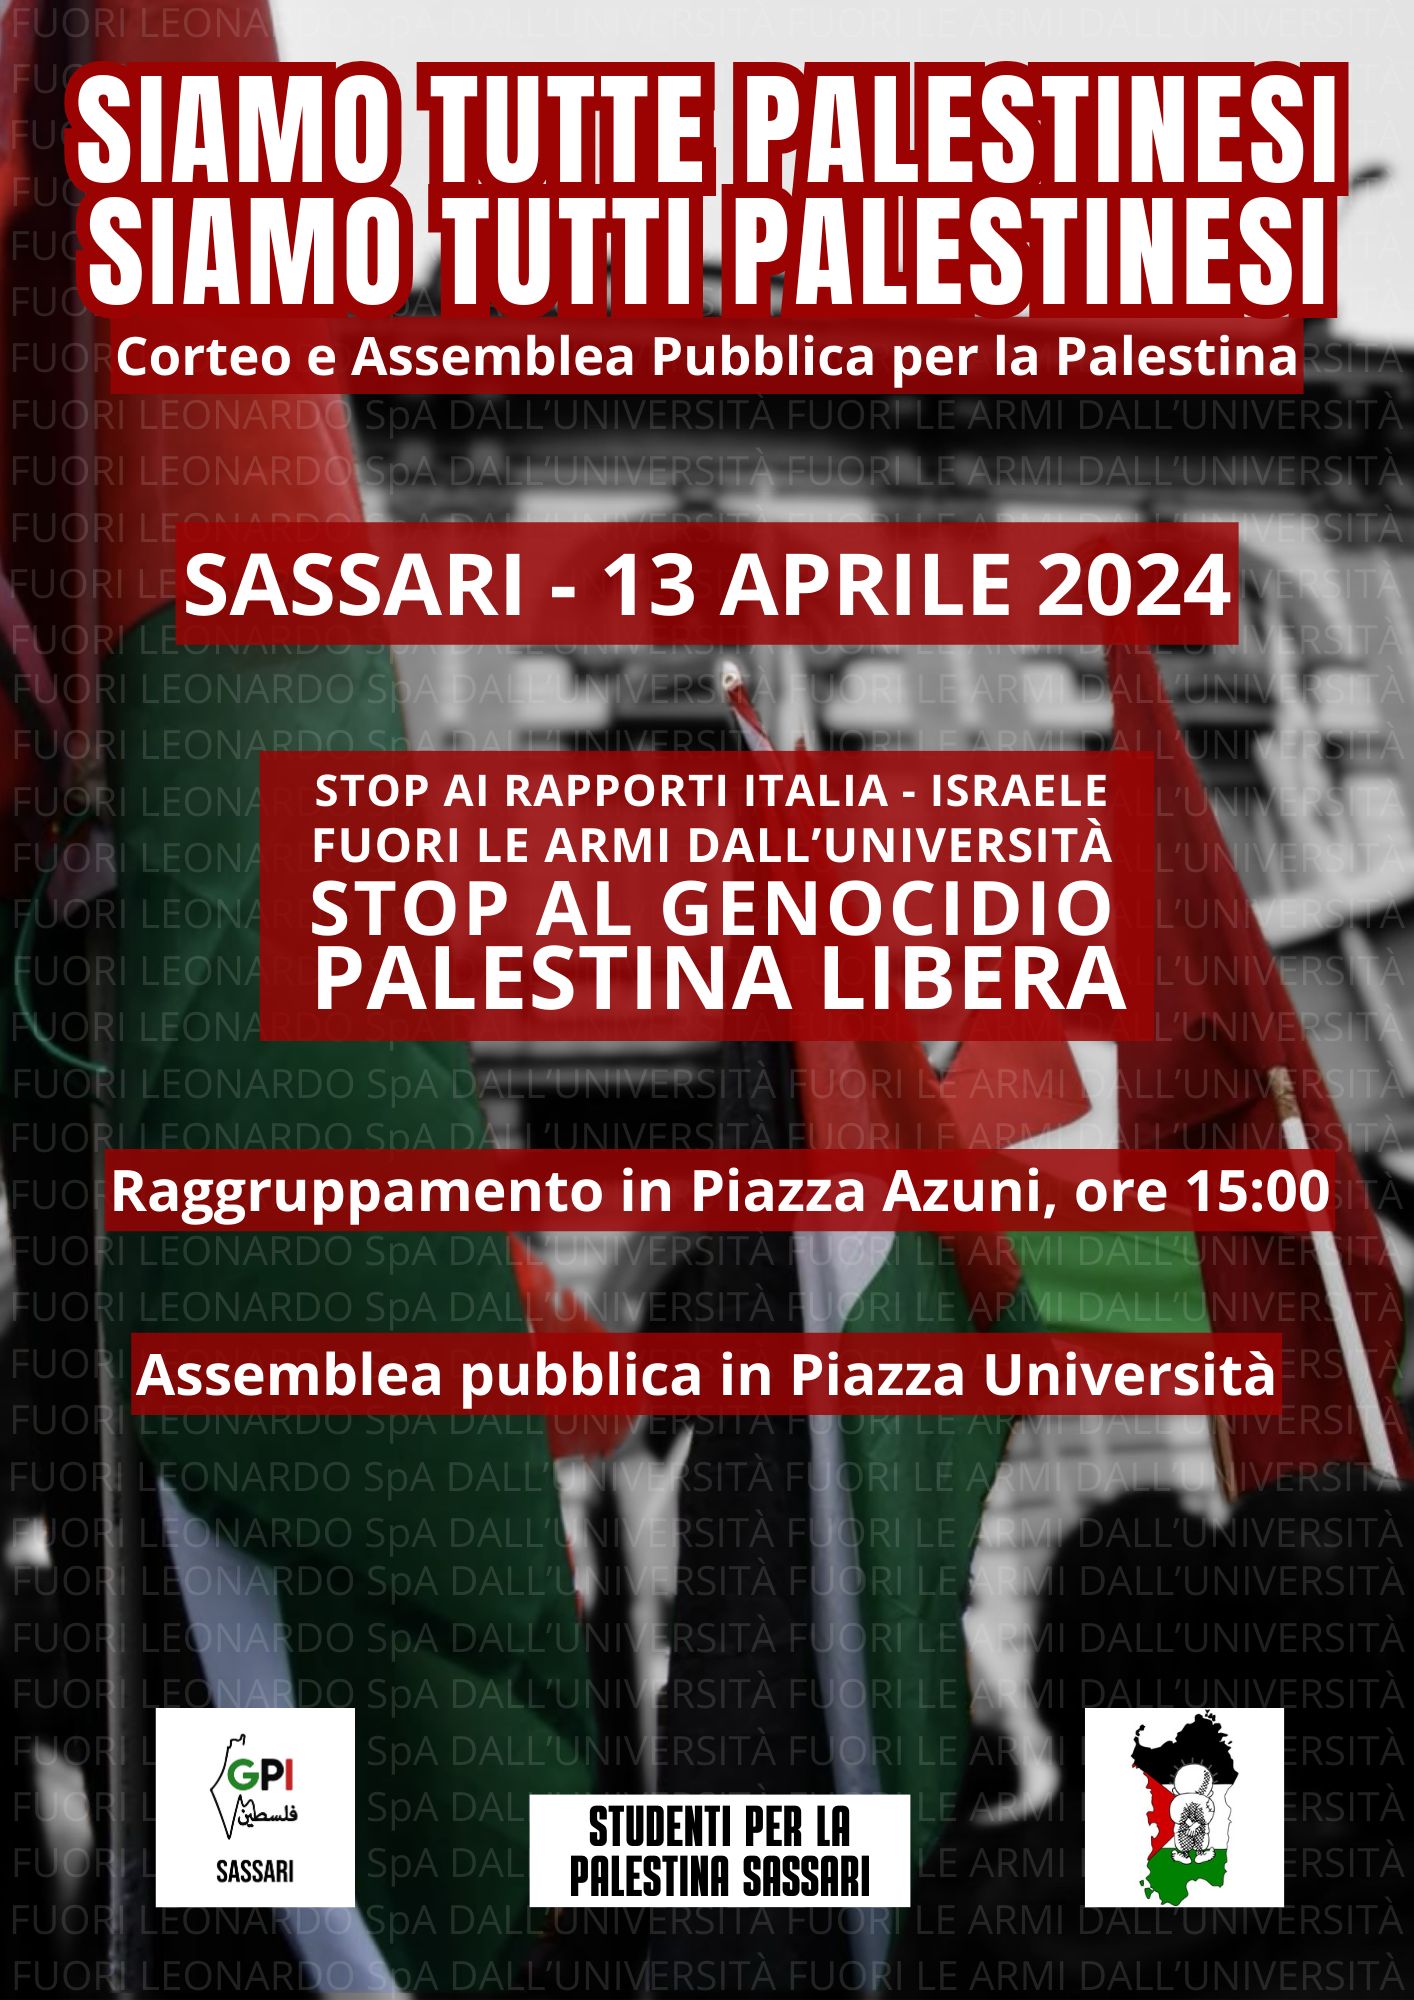 Sassari 13 aprile 2024: “Siamo tutti palestinesi”